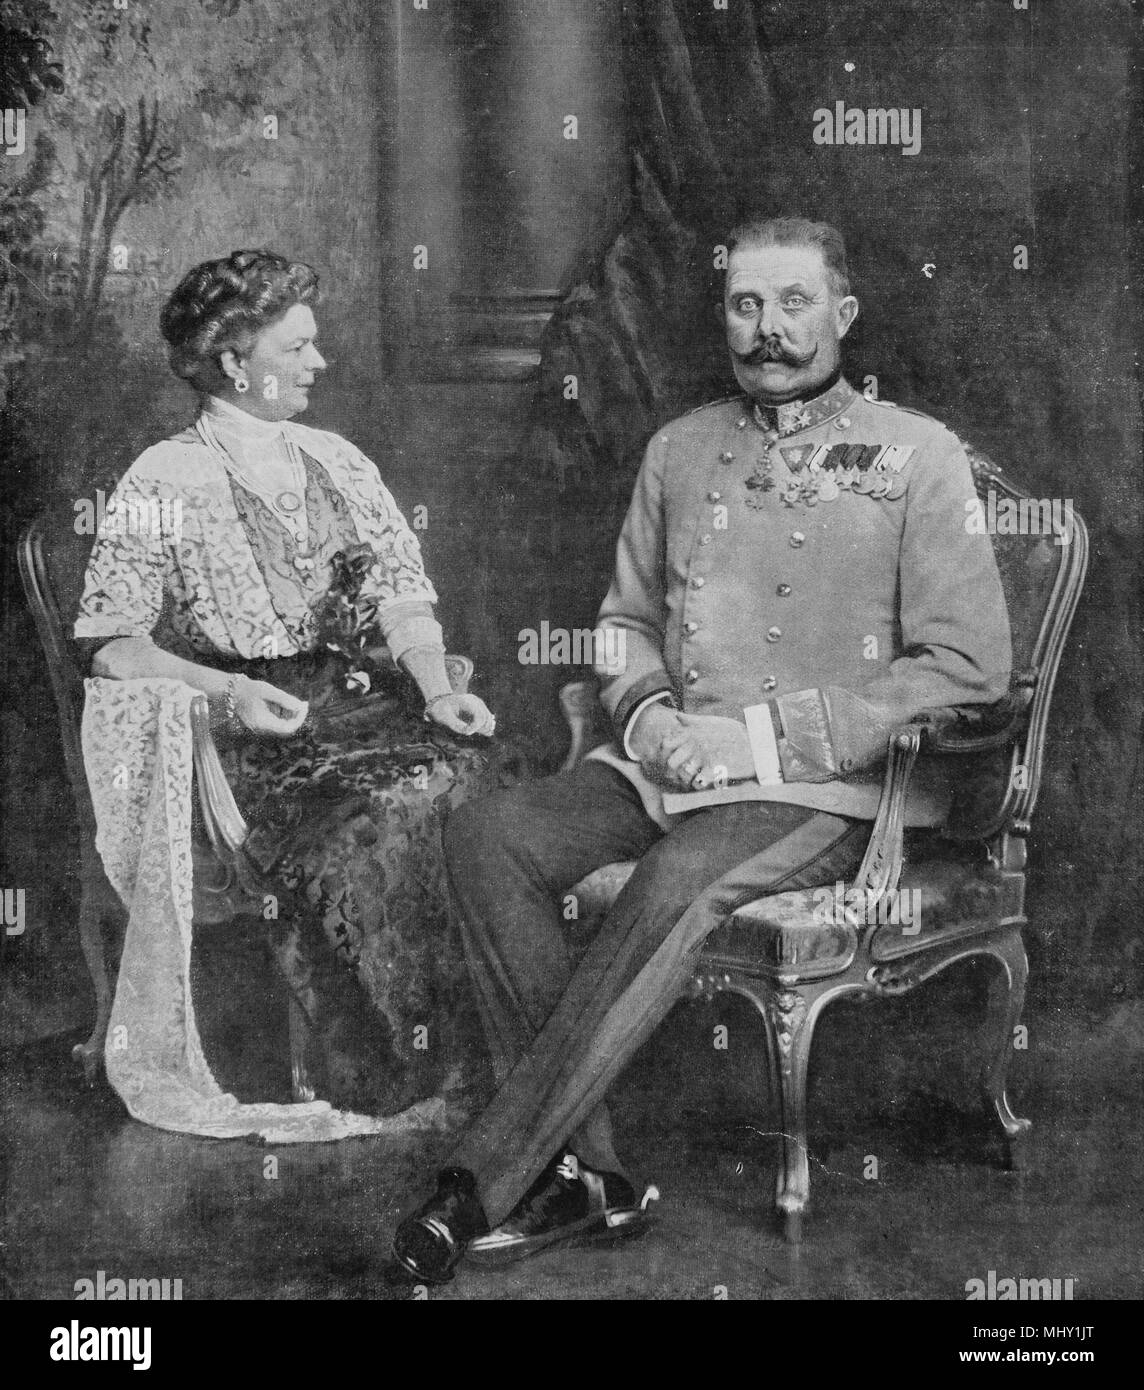 Archduke François- Ferdinand and Duchess of Hohenberg before their assassination in Sarajevo on 28 June 1914, Bosnia and Herzegovina Stock Photo